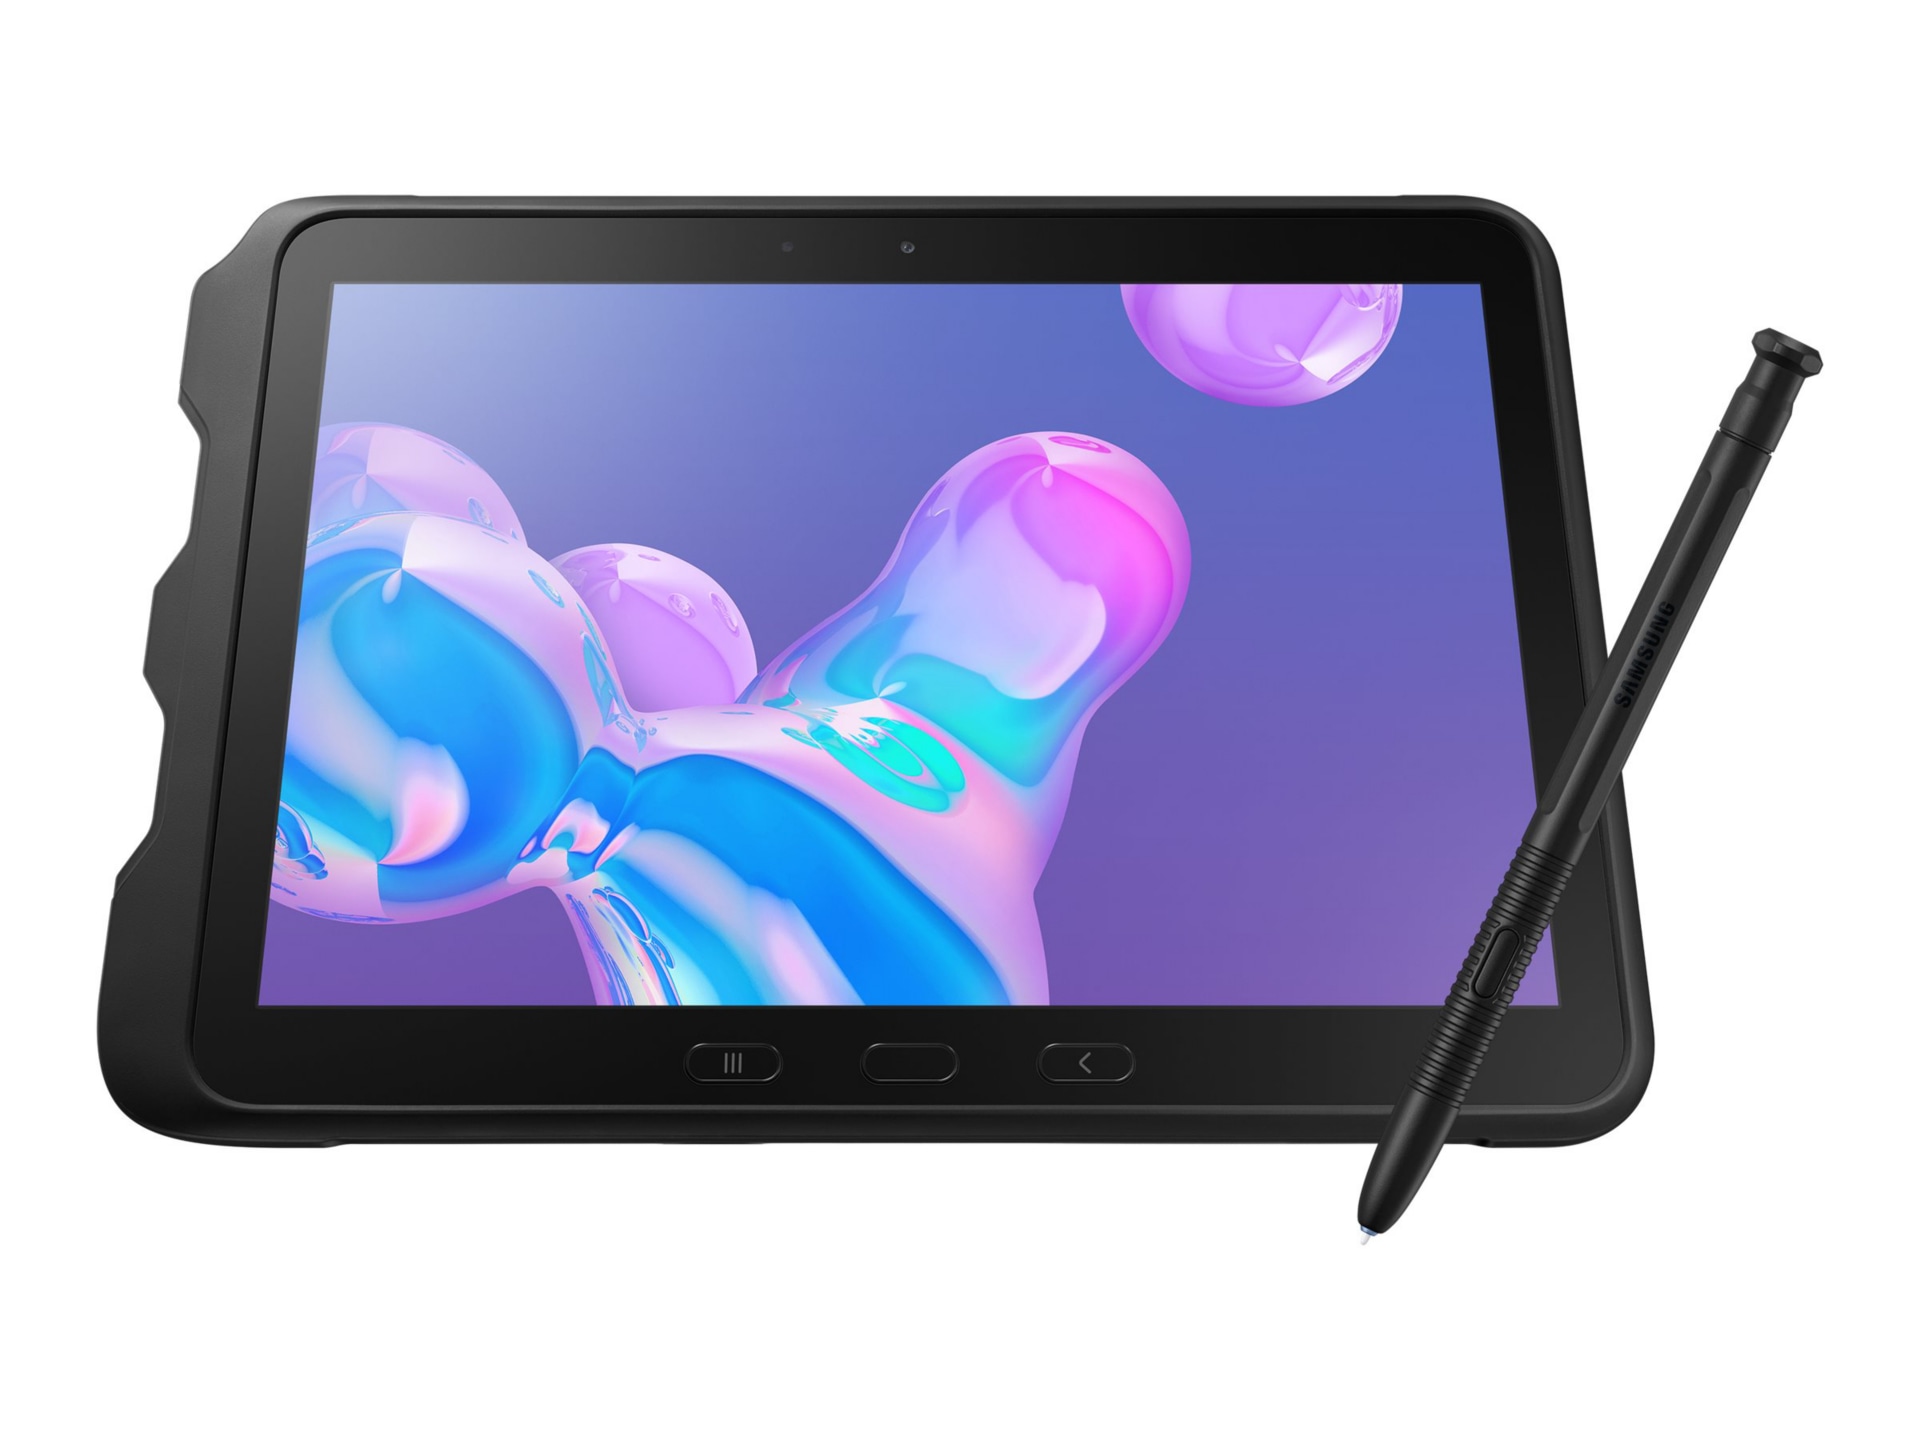 Samsung Galaxy Tab Active Pro tablet 10.1